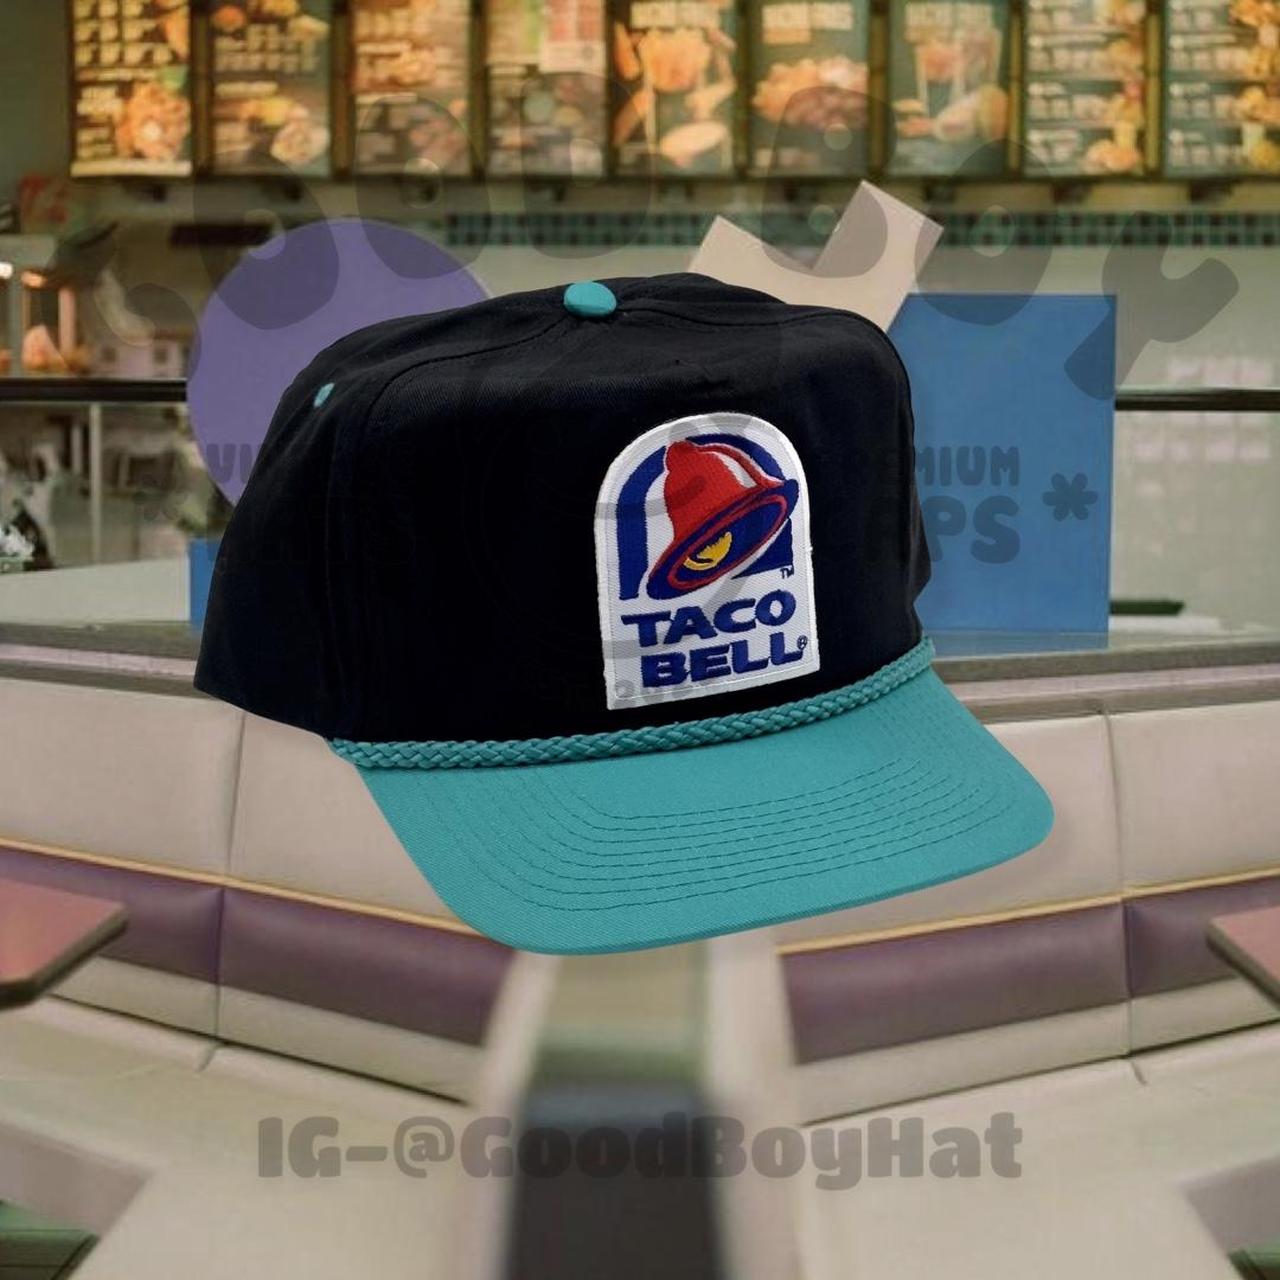 Taco Bell Retro Trucker Hat Vintage Uniform Snap Back 90s Crest